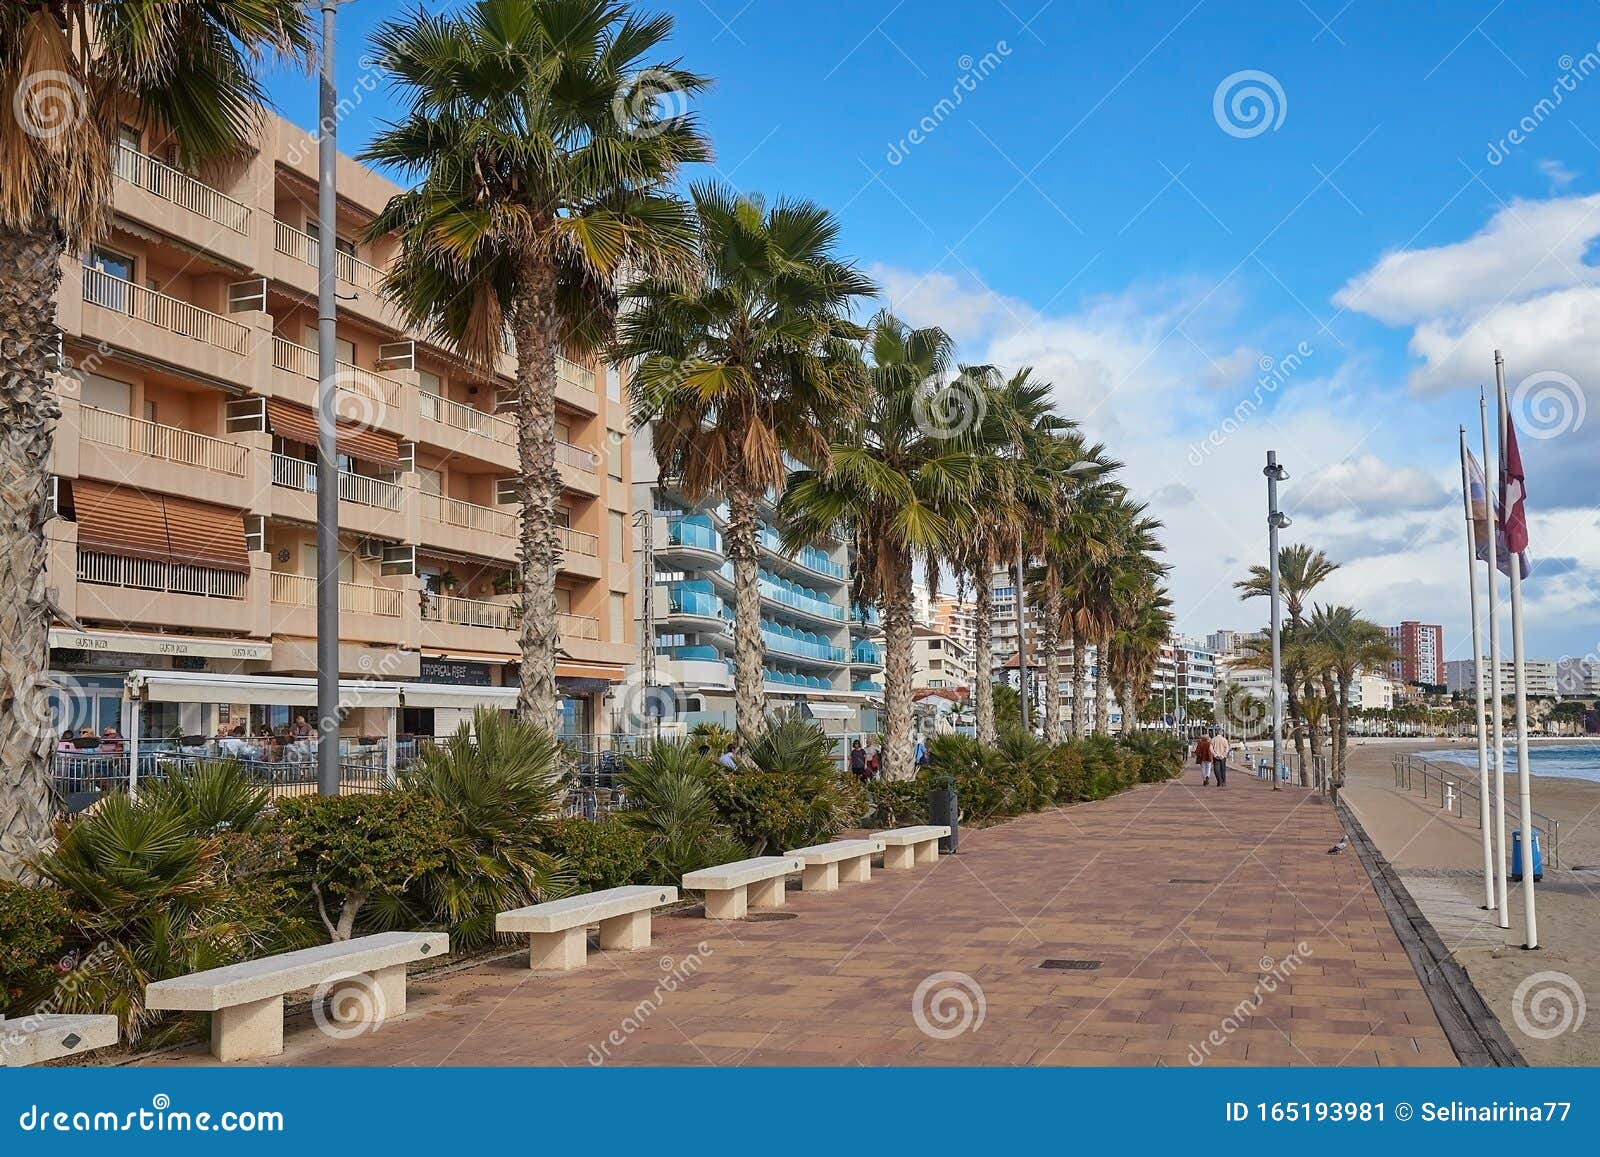 Villajoyosa, Spain - November 24, 2019: Facades of Houses and Avenue of ...